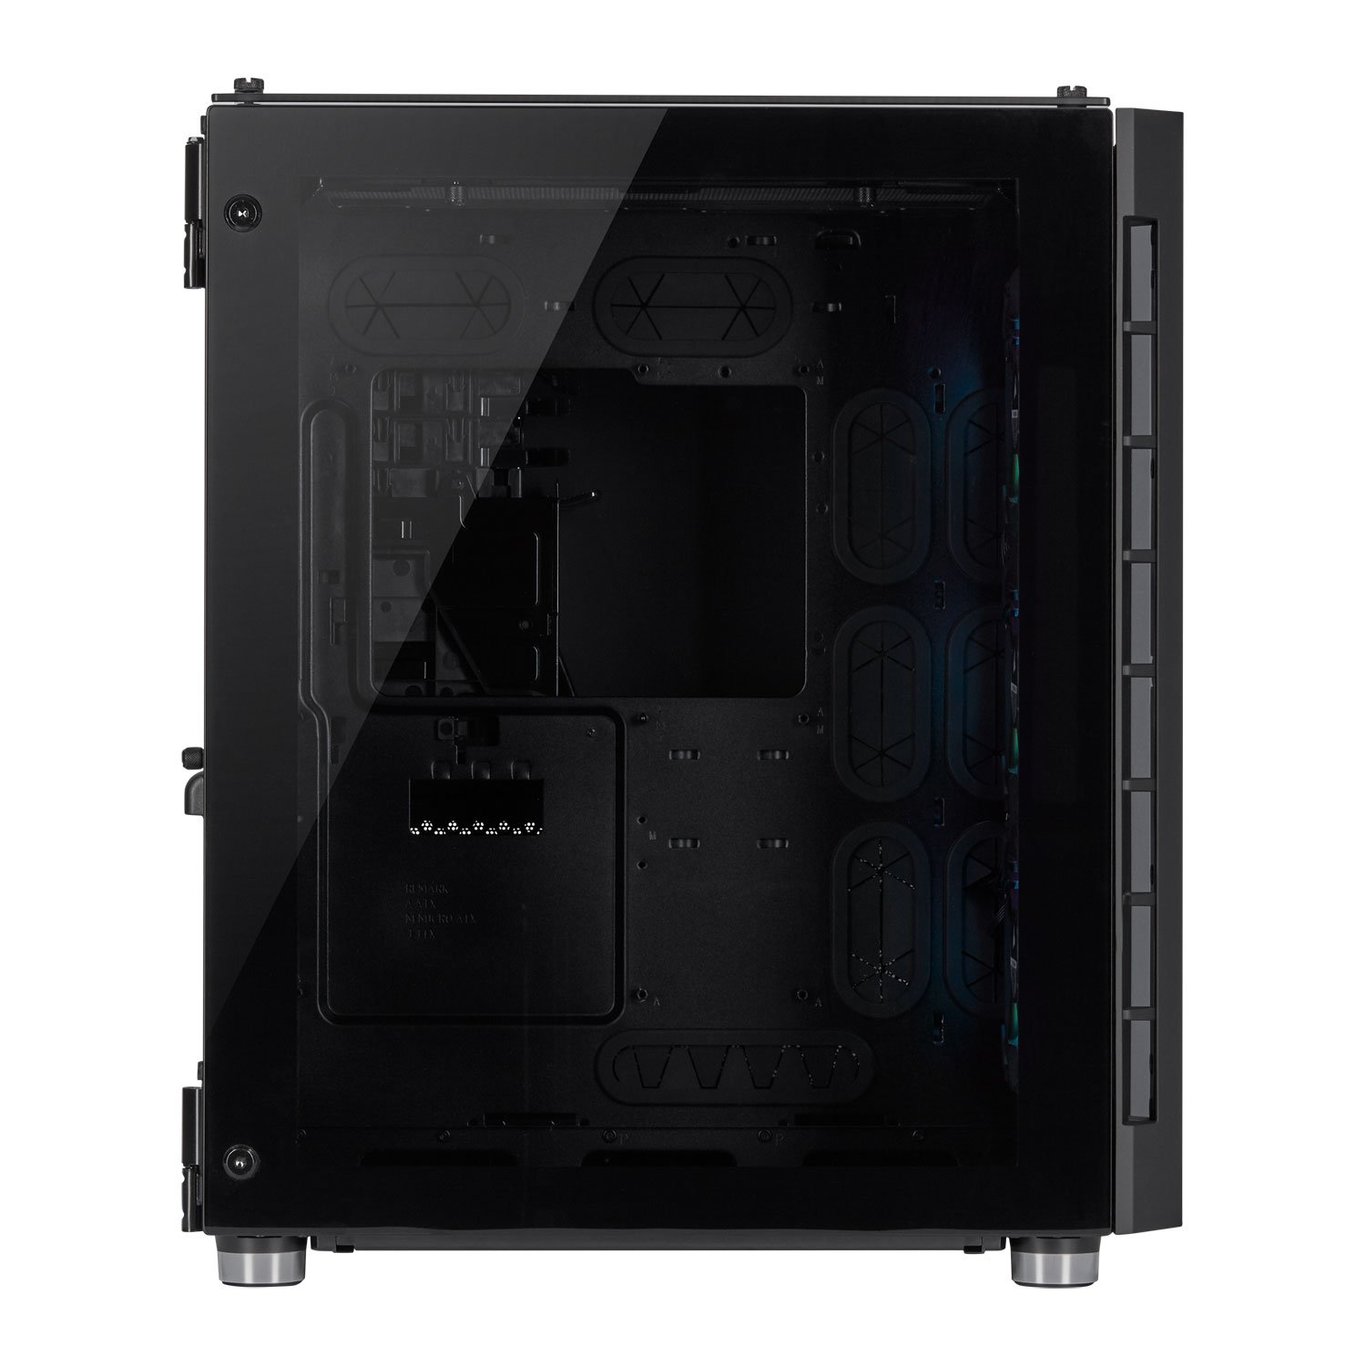 Corsair Crystal Series 680X RGB ATX 機箱 - Black 黑色